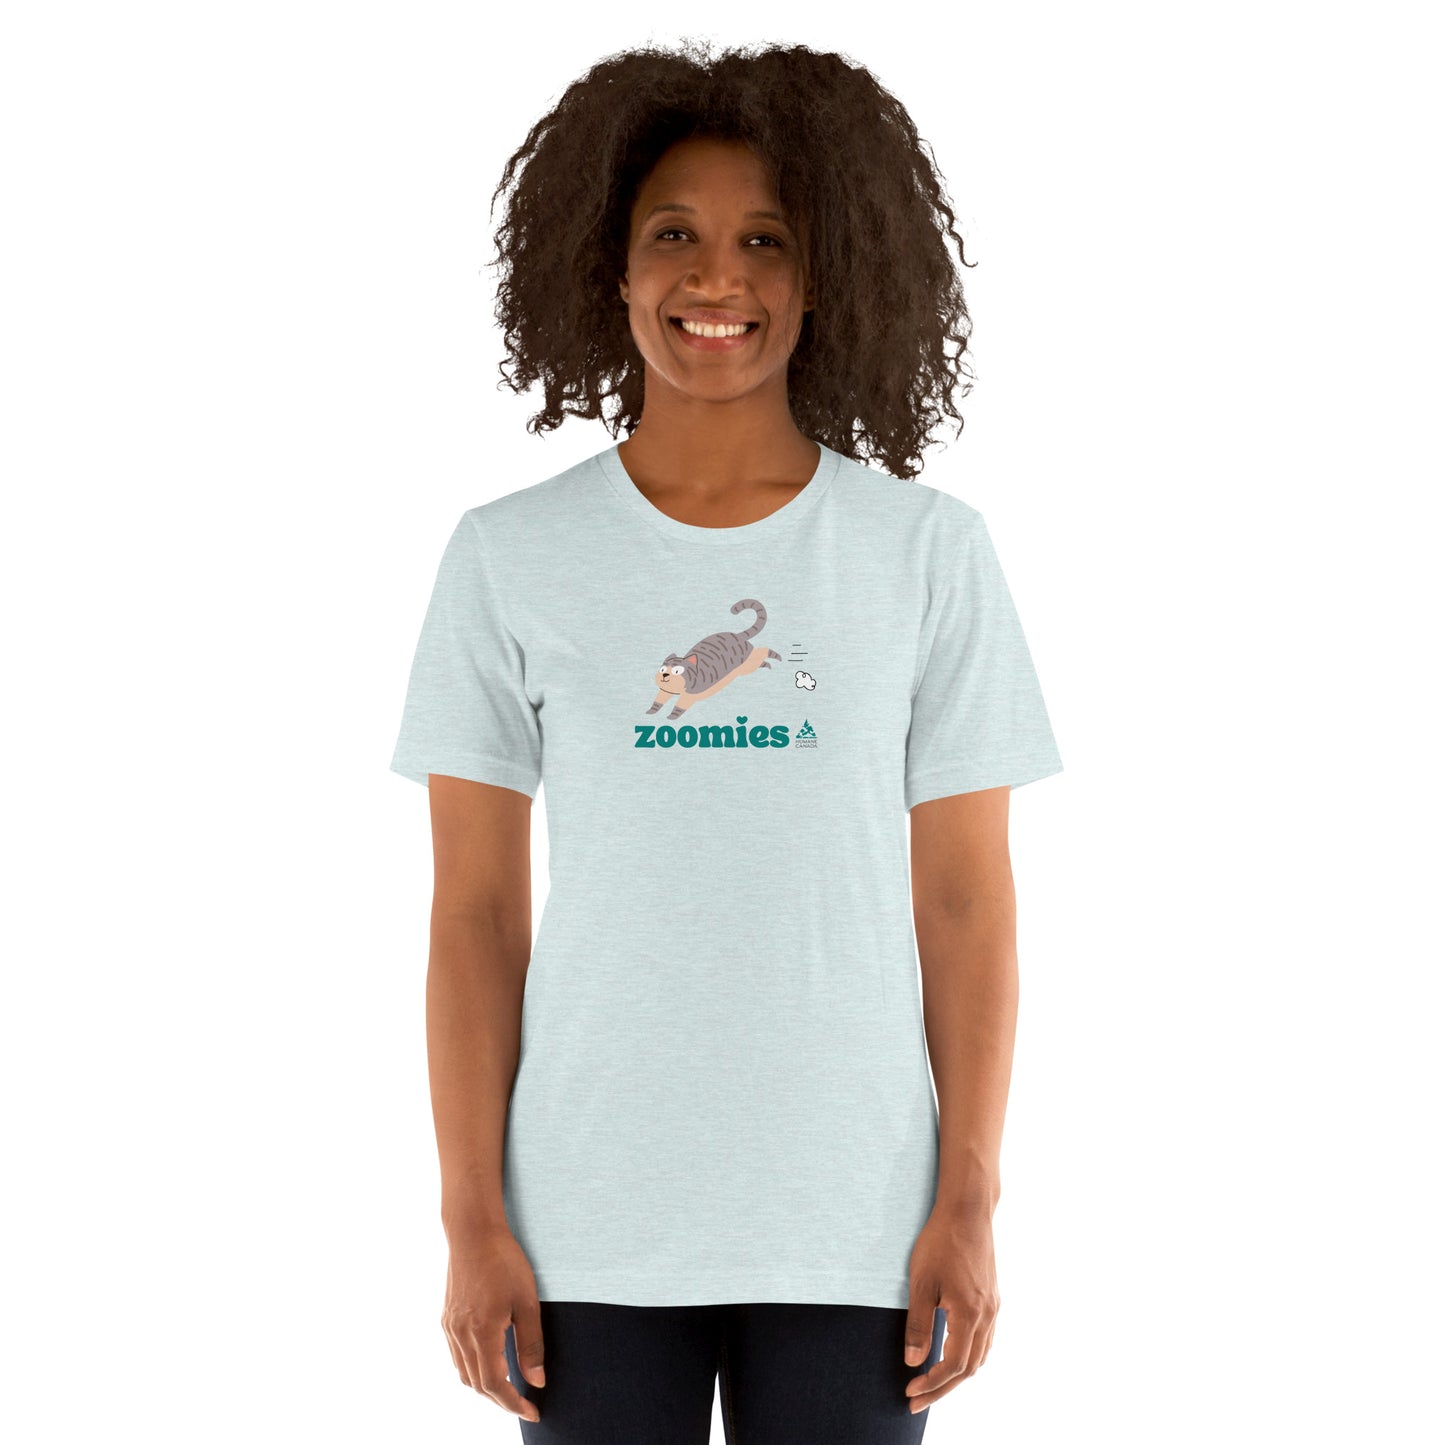 Zoomies (Cat) Unisex t-shirt